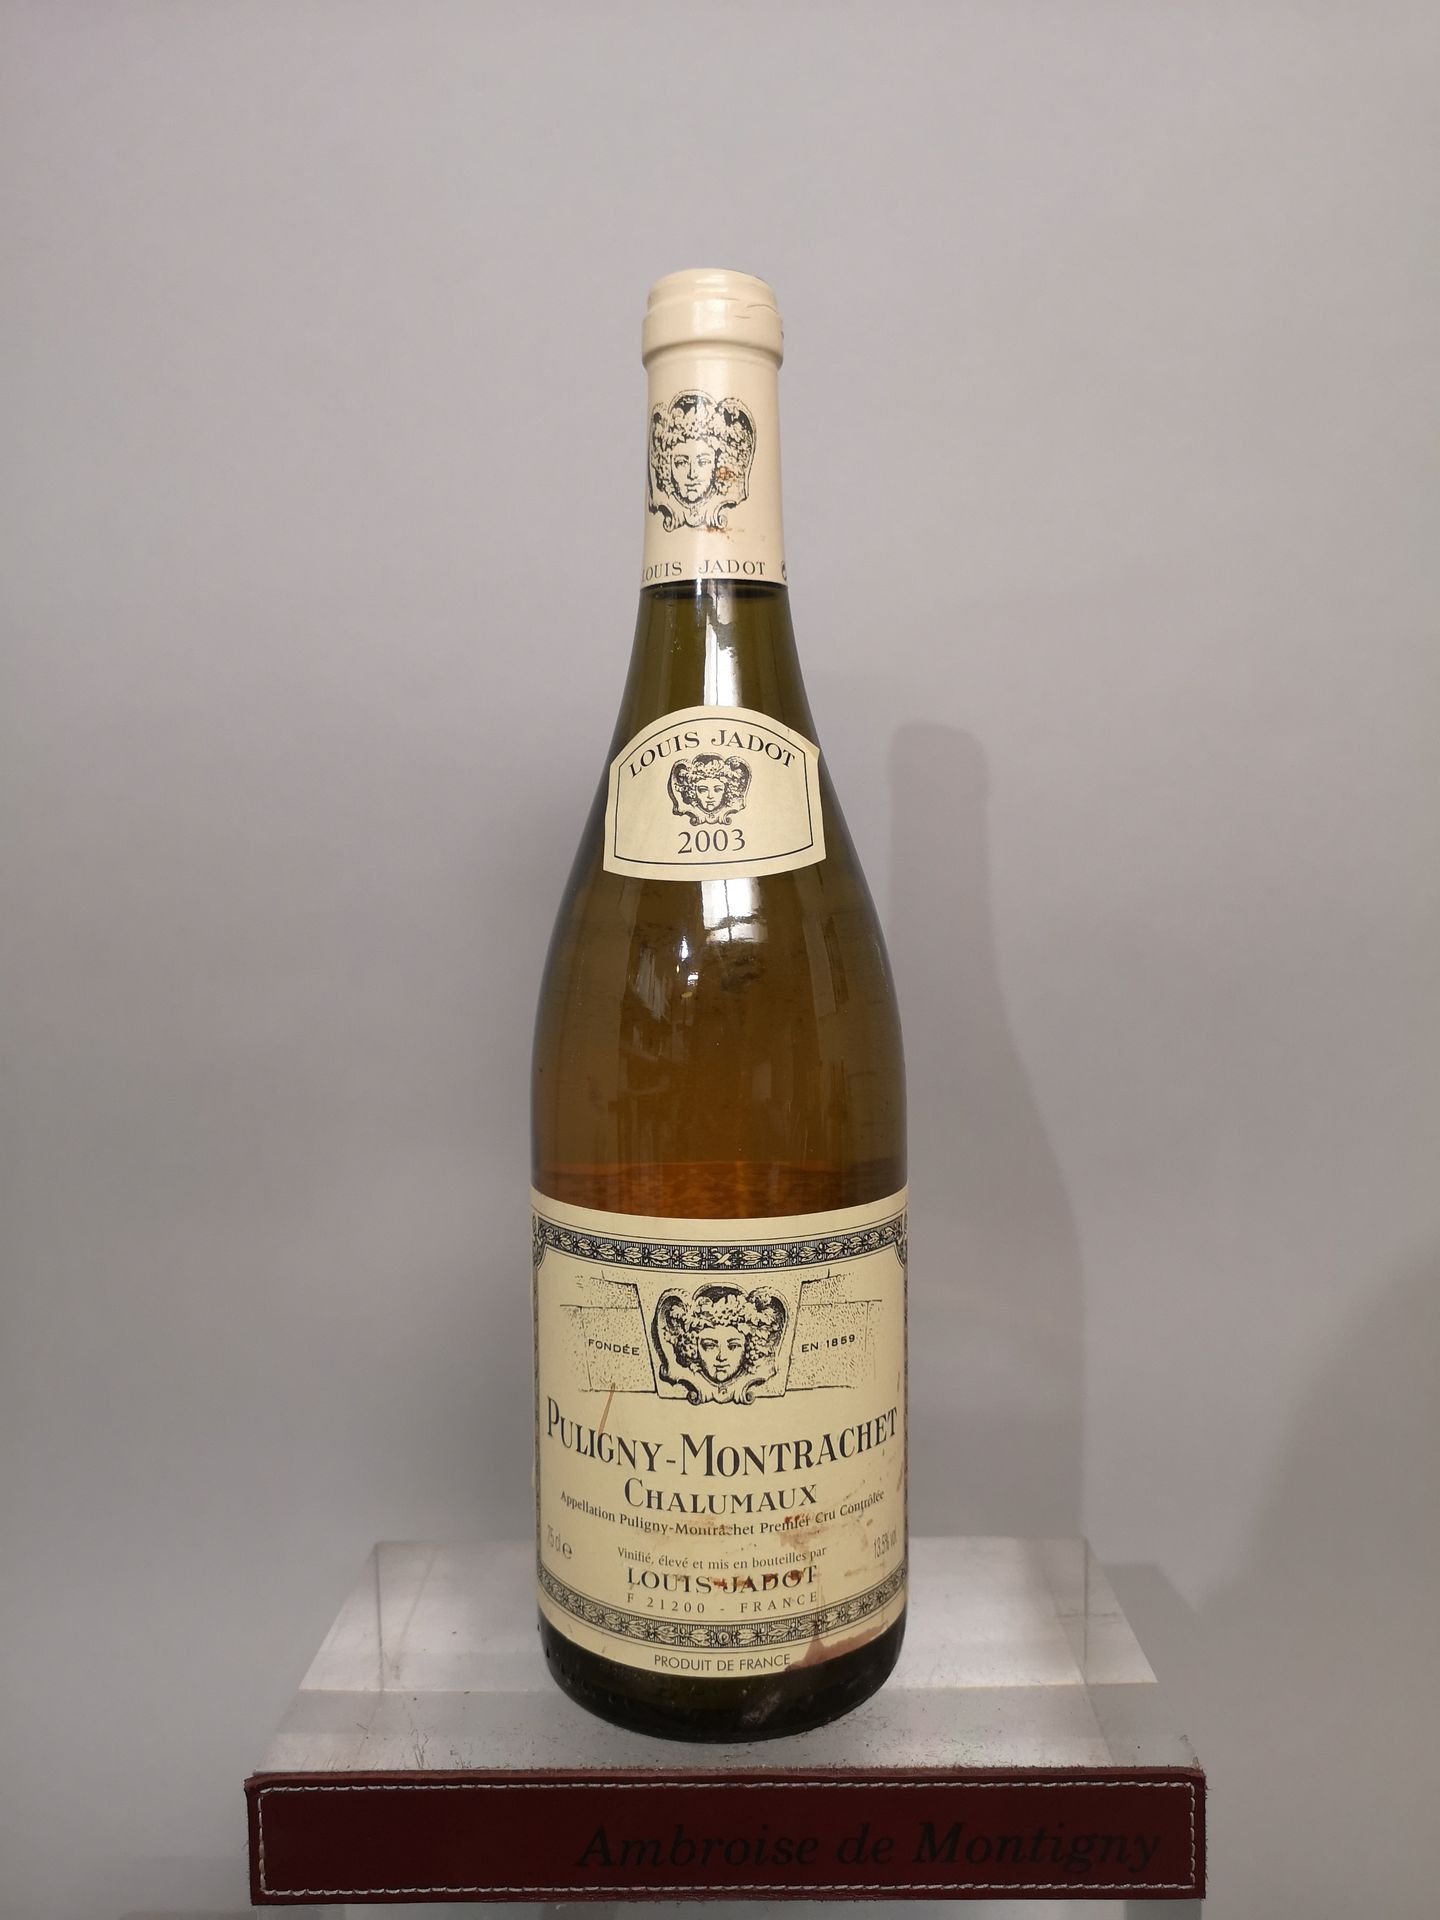 Null 1瓶PULIGNY MONTRACHET 1er cru "Chalumaux" - L. JADOT 2003 

标签略有污点。